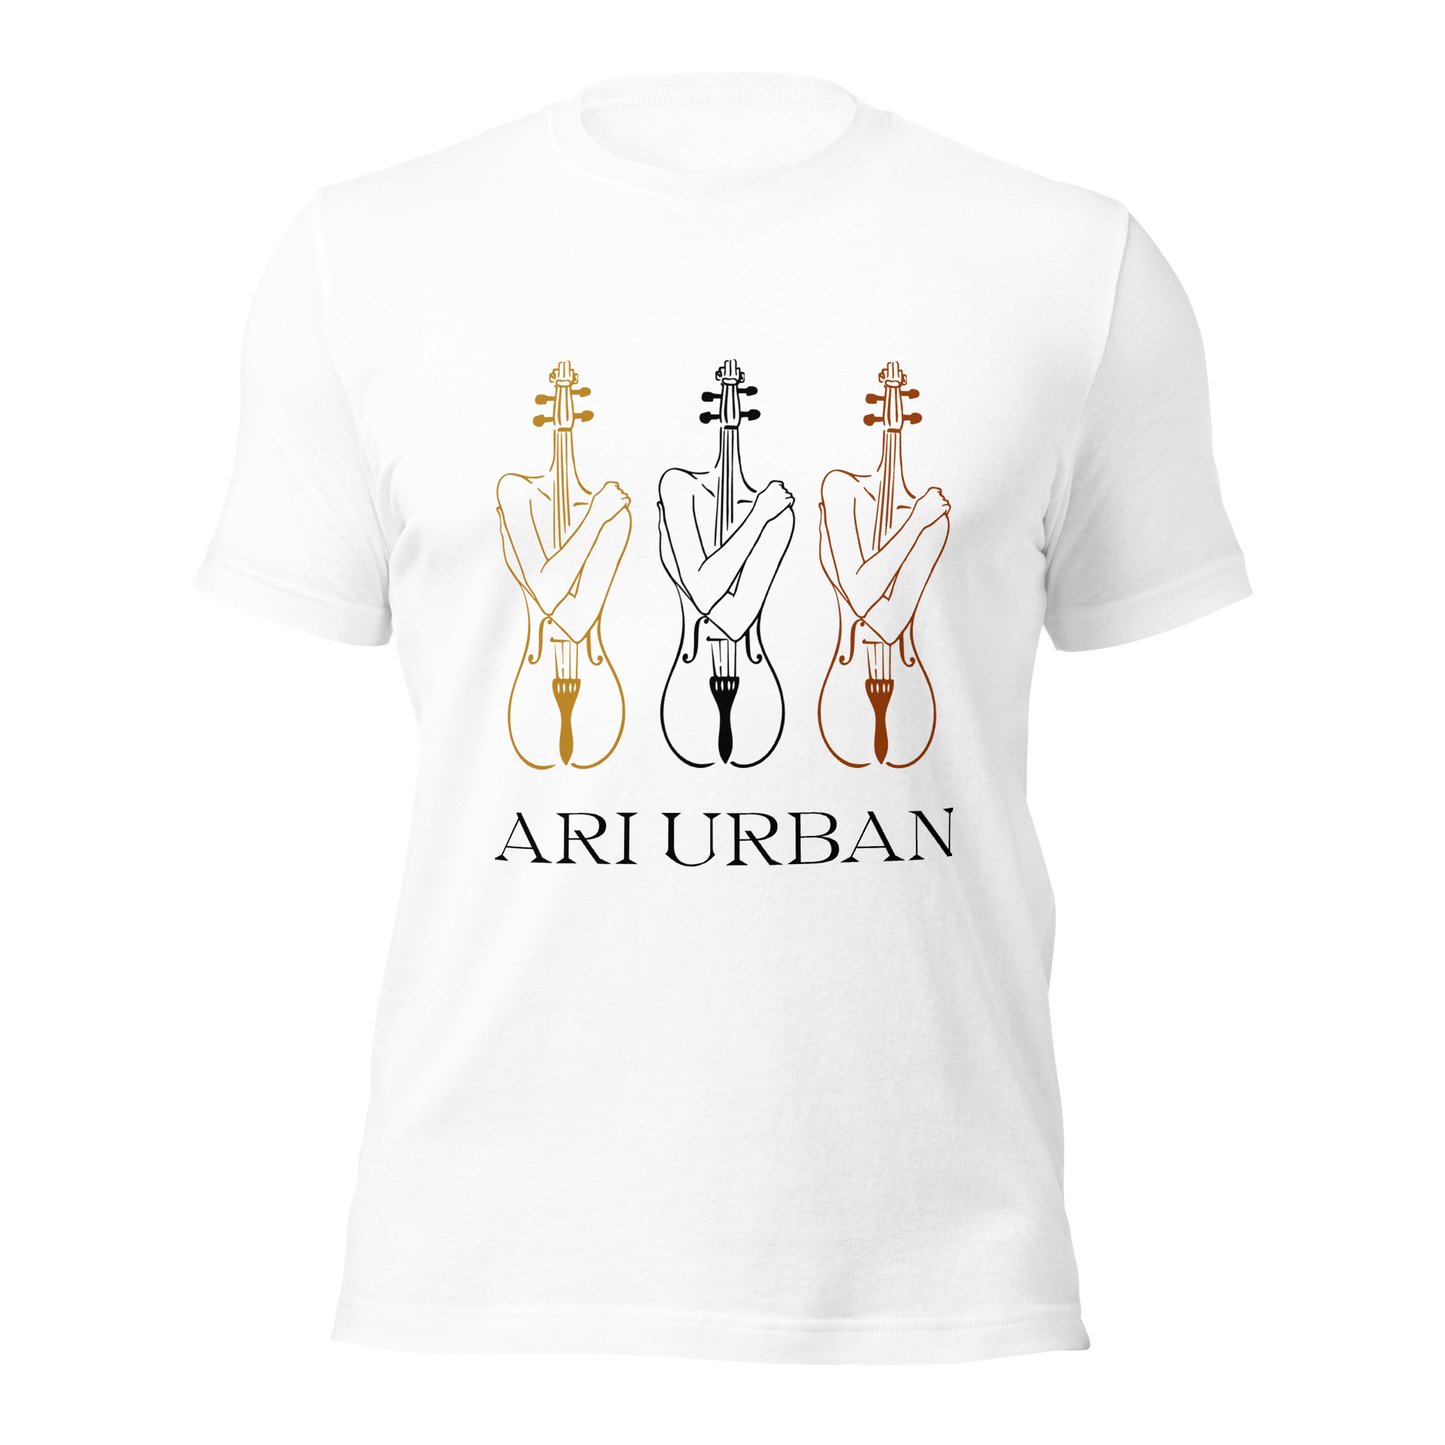 Ari Urban T-shirt